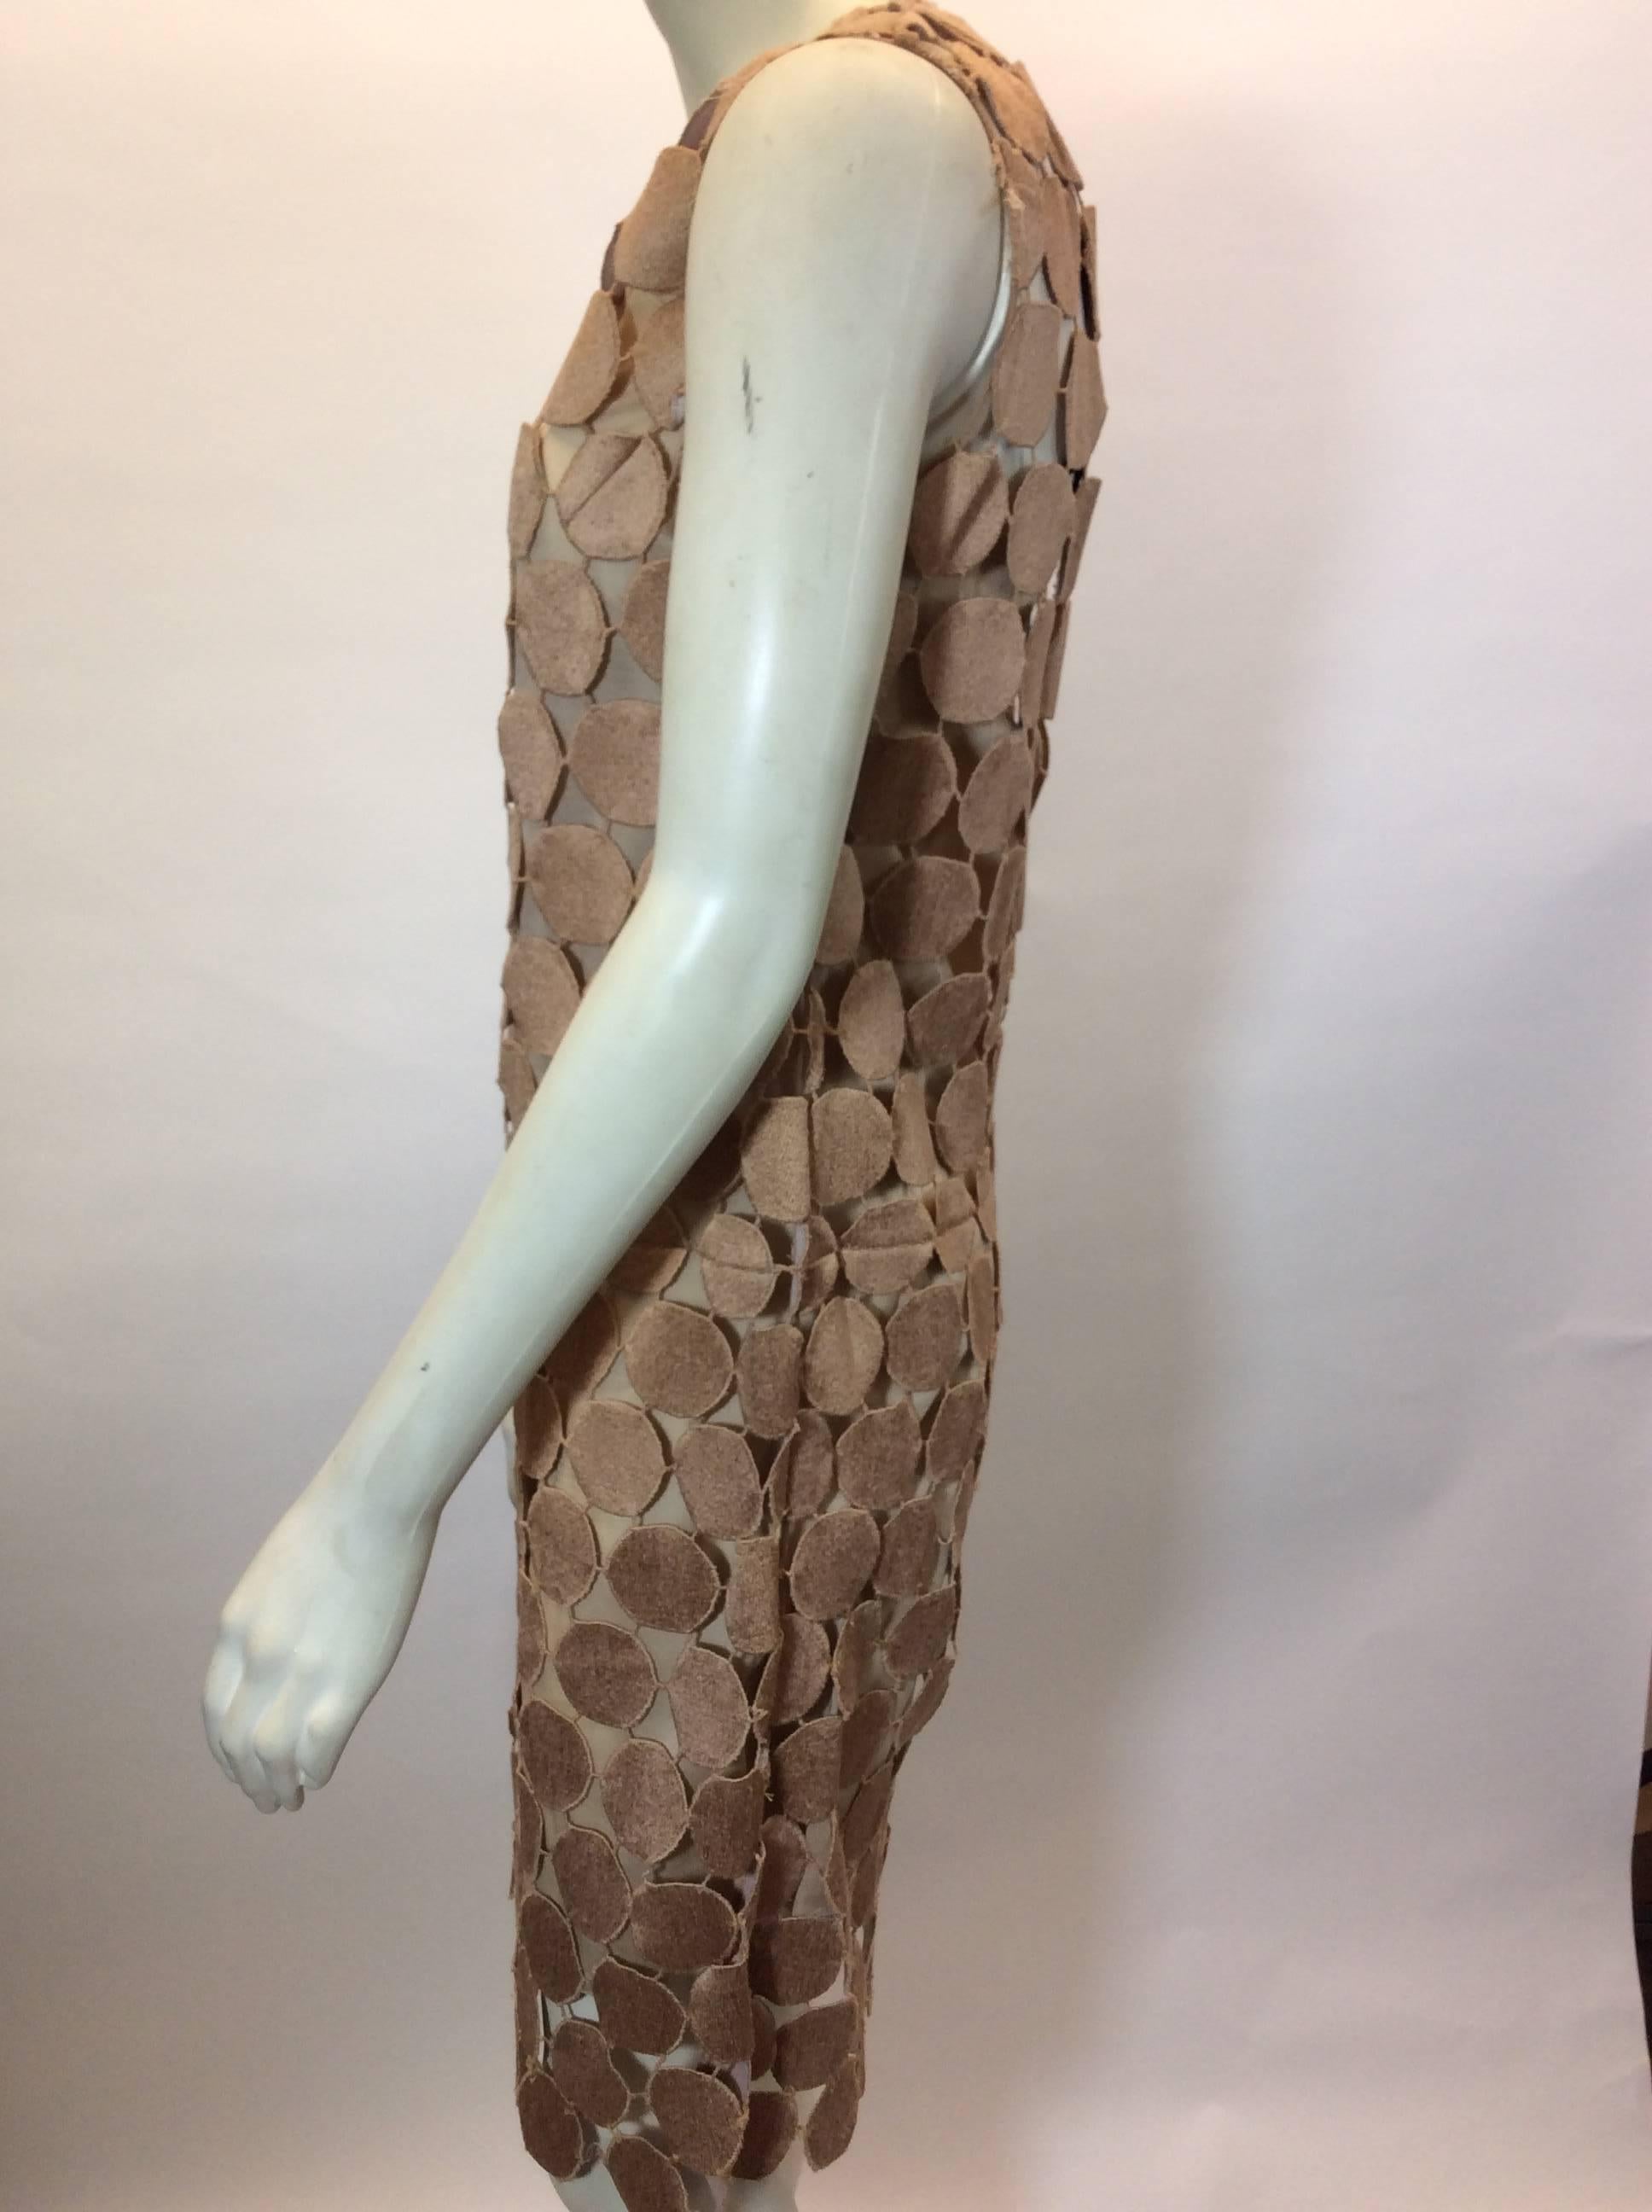 Tan Crocheted Circle Pattern Sheath Dress
Nude lining
Black tie closure on neckline
Sleeveless
Size 40
100% Cotton